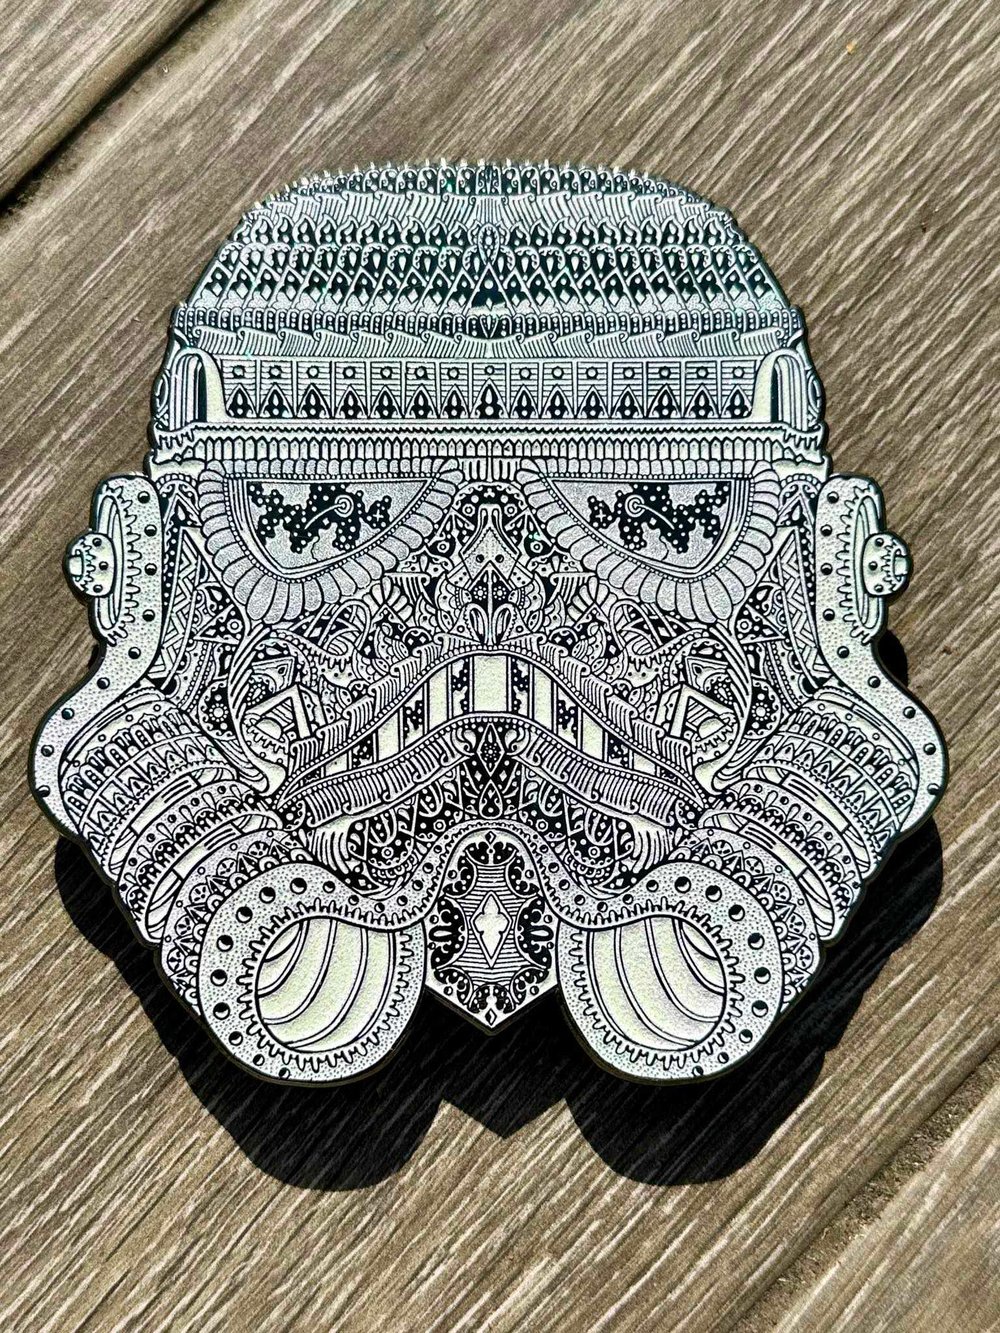 Ornate stormtrooper pin